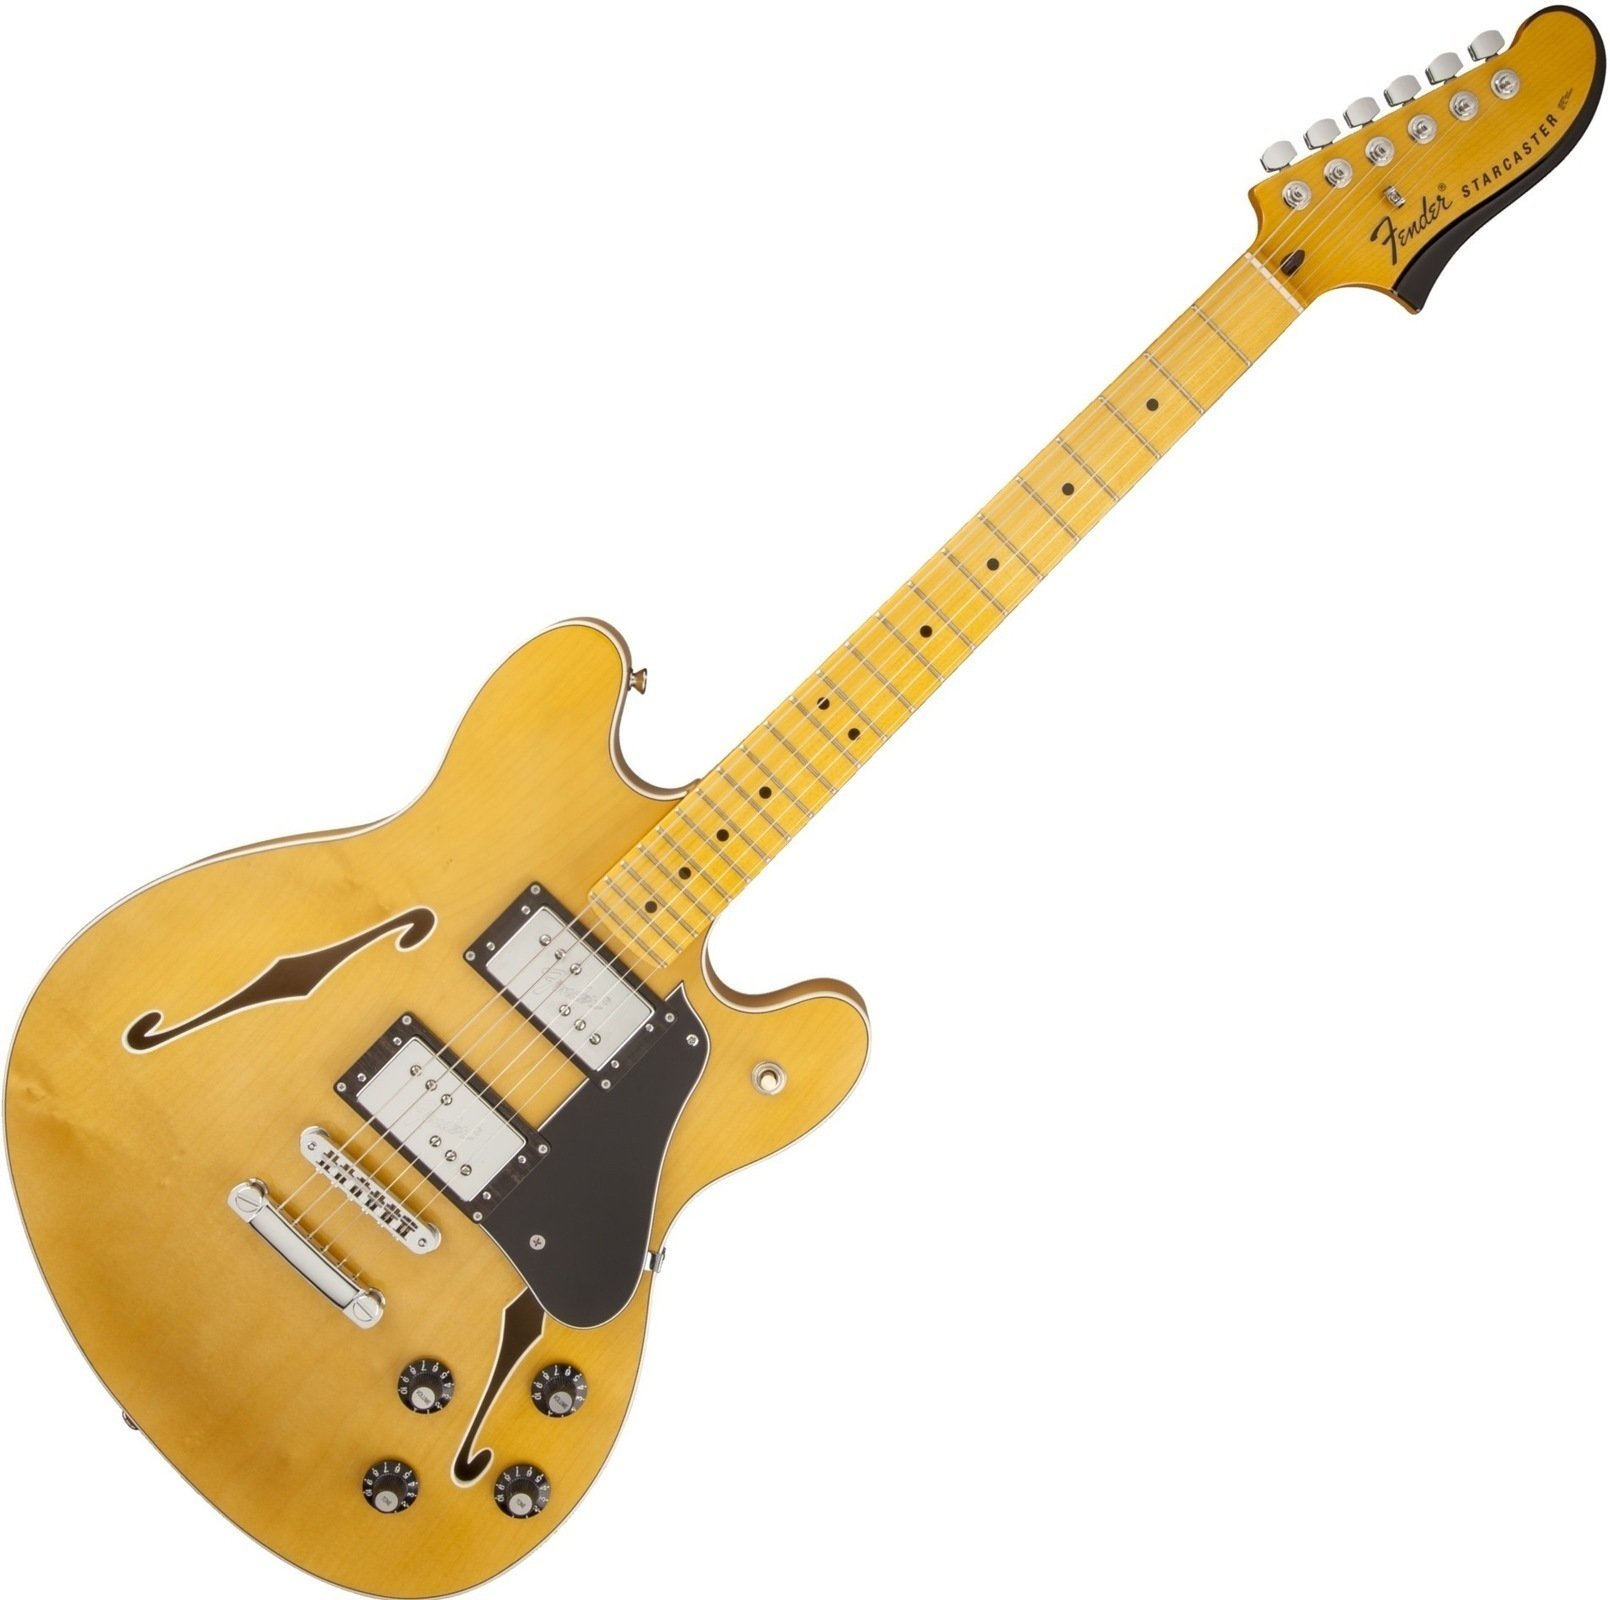 Semiakustická kytara Fender Starcaster, Maple Fingerboard, Natural